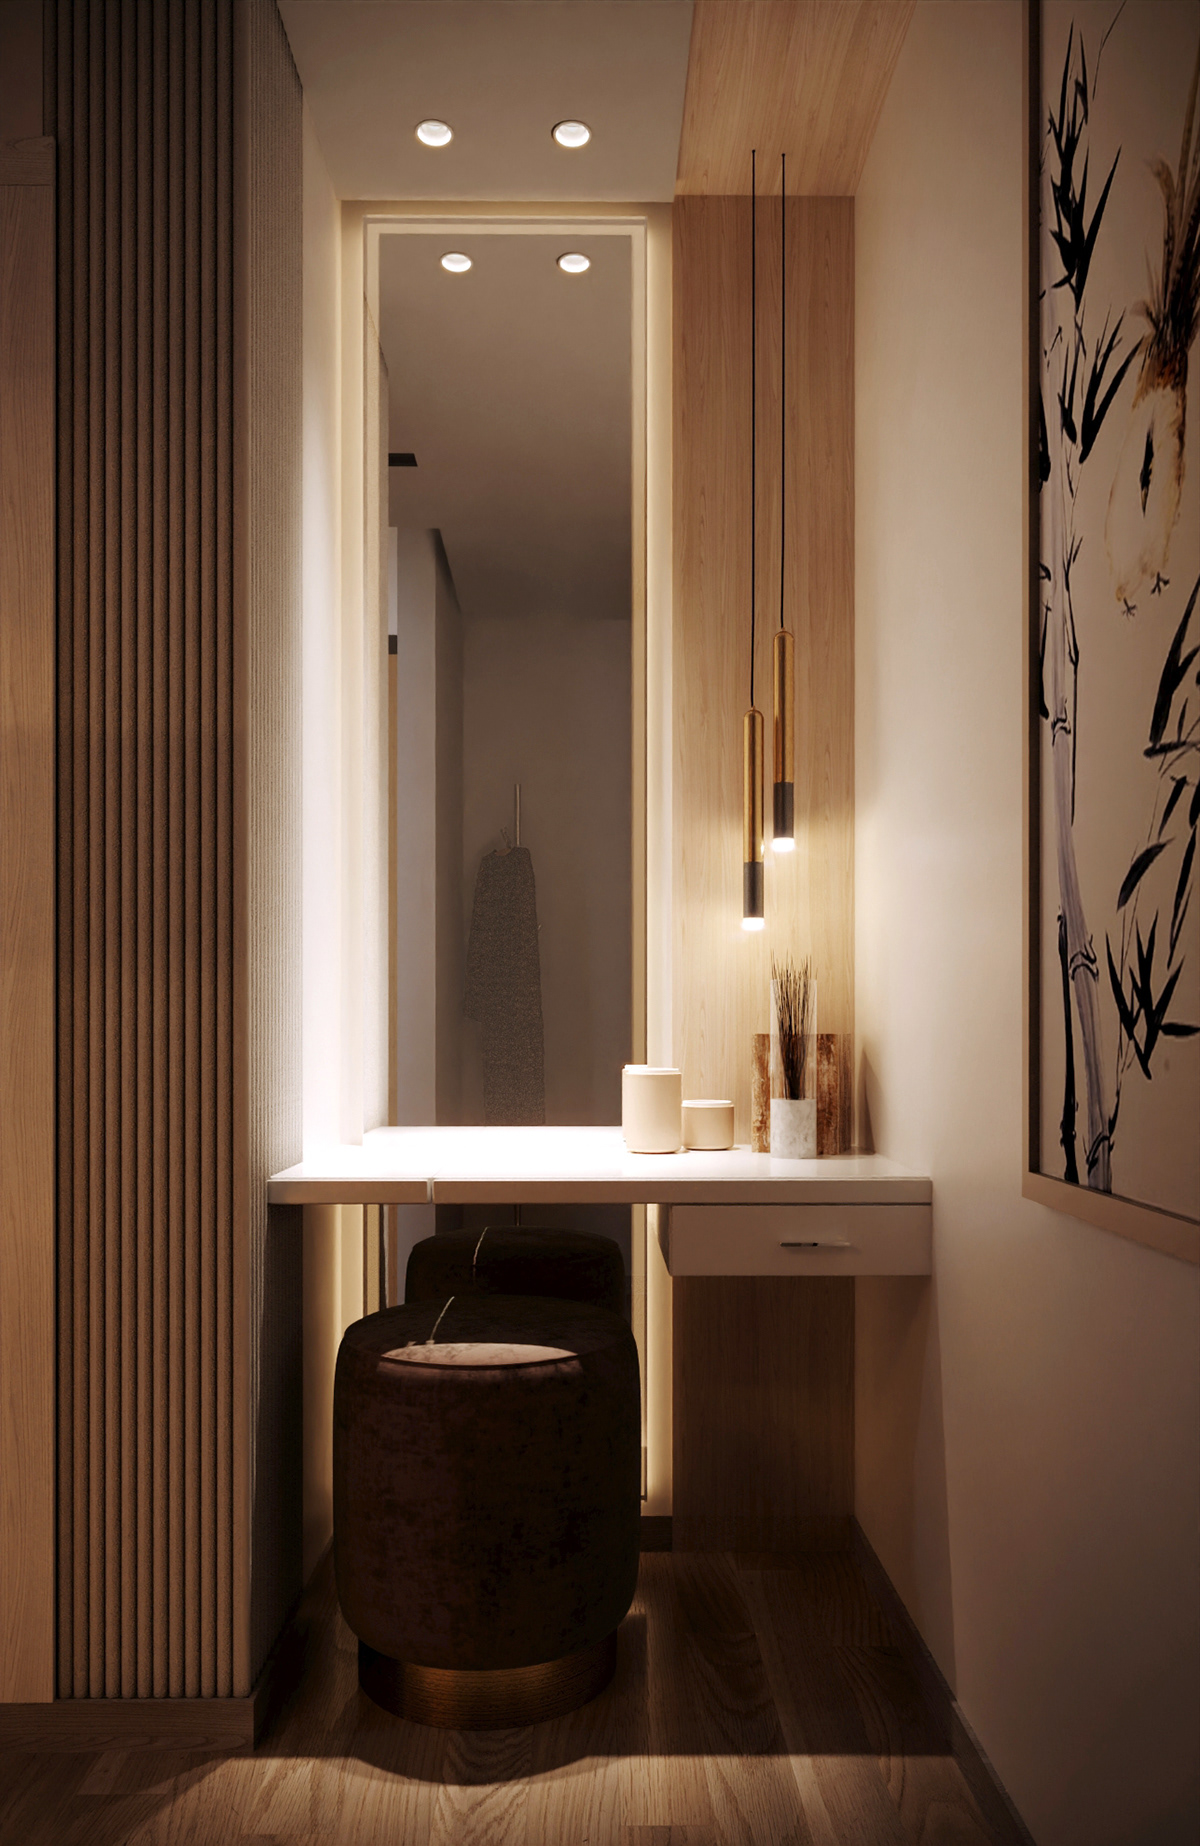 architecture art cairo design Interior japanese Minimalism bedroom residential visualization